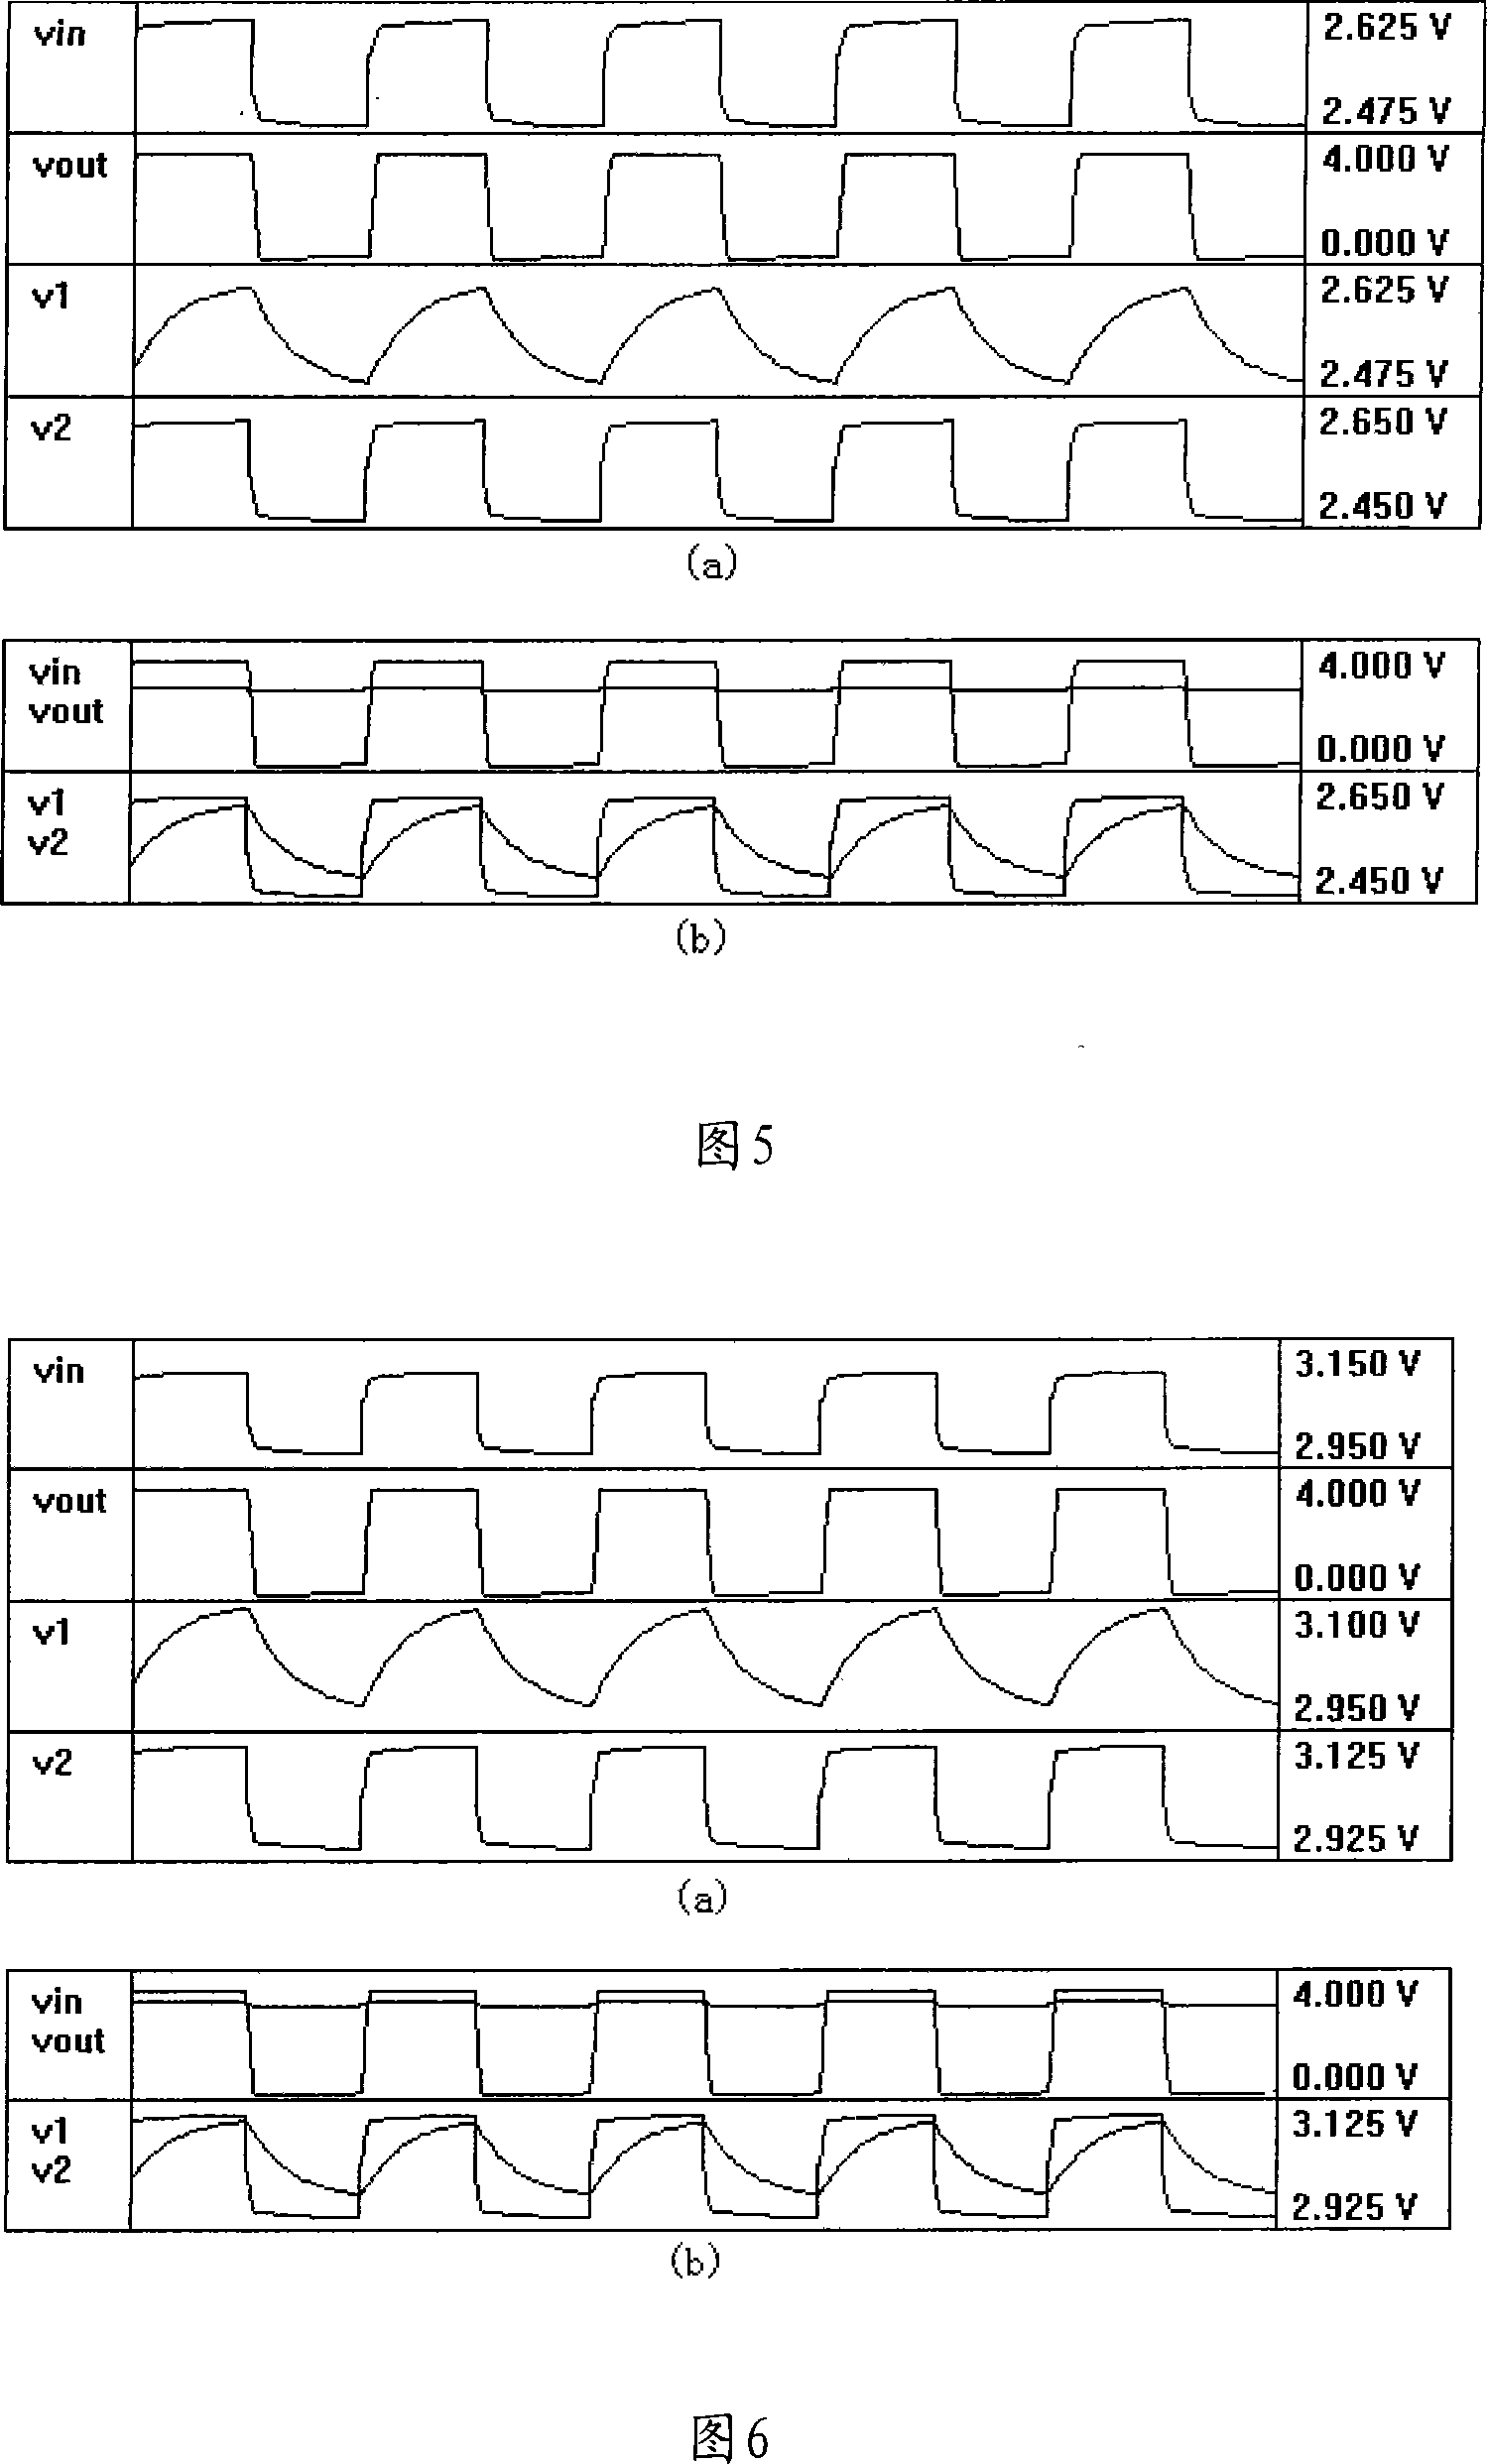 Waveform shaping circuit